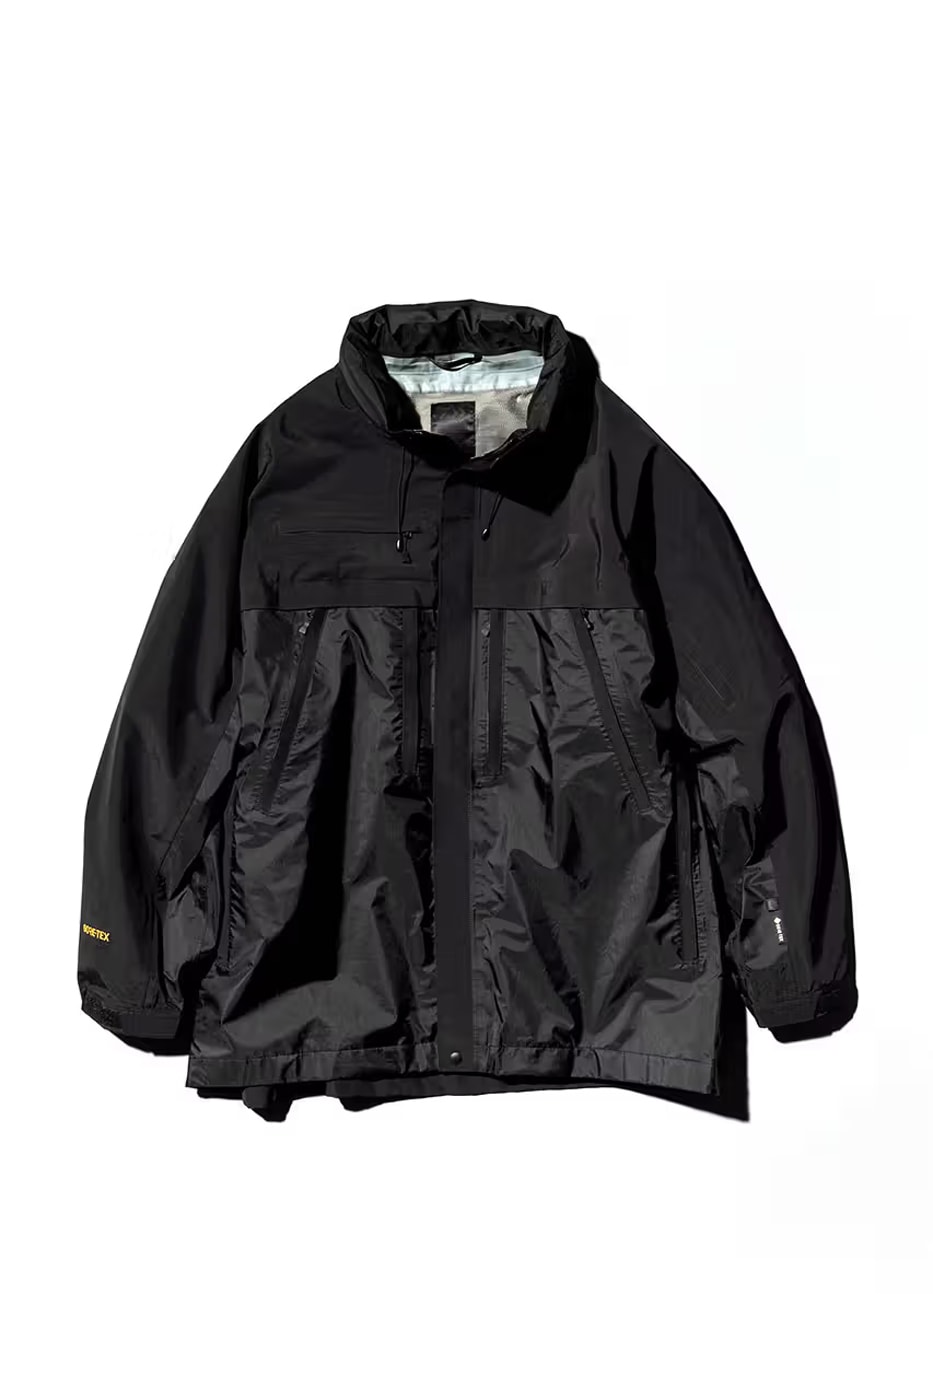 DAIWA PIER39 Drops Two Limited Edition GORE-TEX Technical Jackets japanese street style brand streetwear functional waterproof jacket 